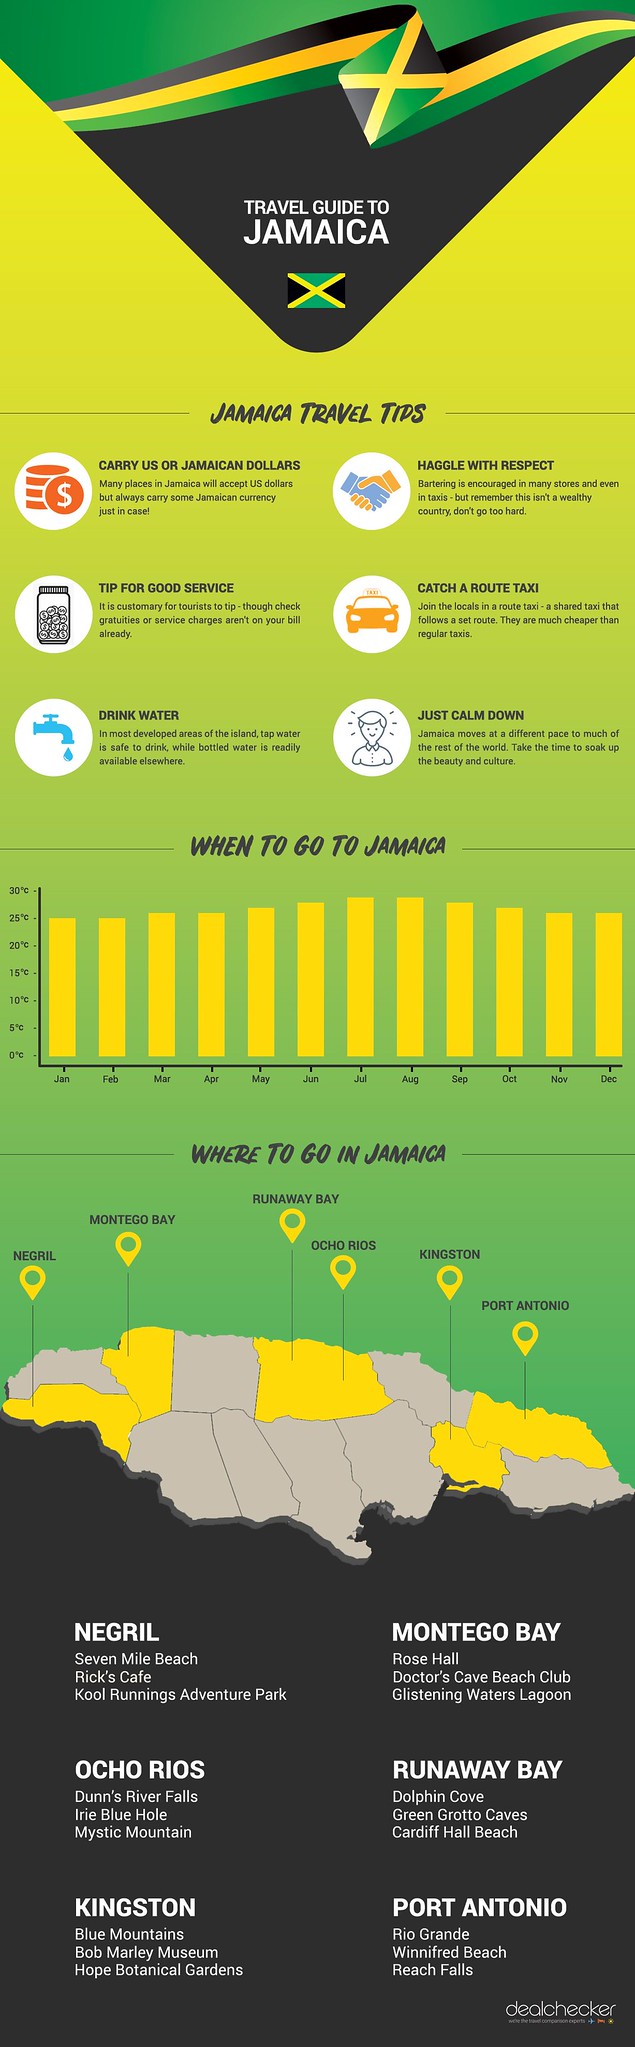 Travel Guide to Jamaica